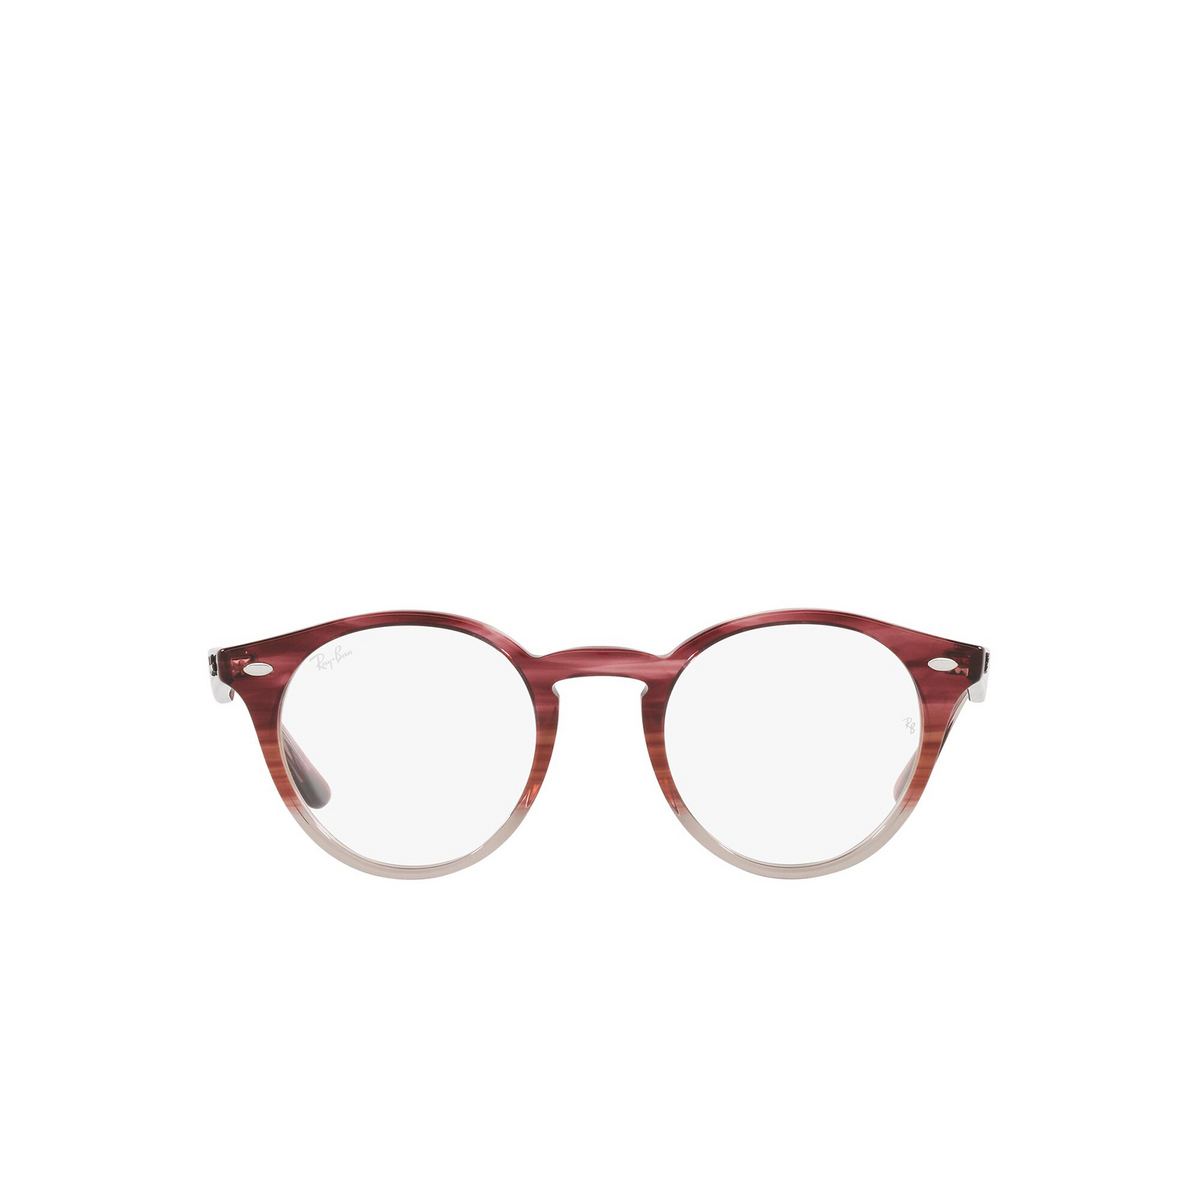 Ray-Ban® Round Eyeglasses: RX2180V color Gradient Bordeaux Havana 8145 - front view.